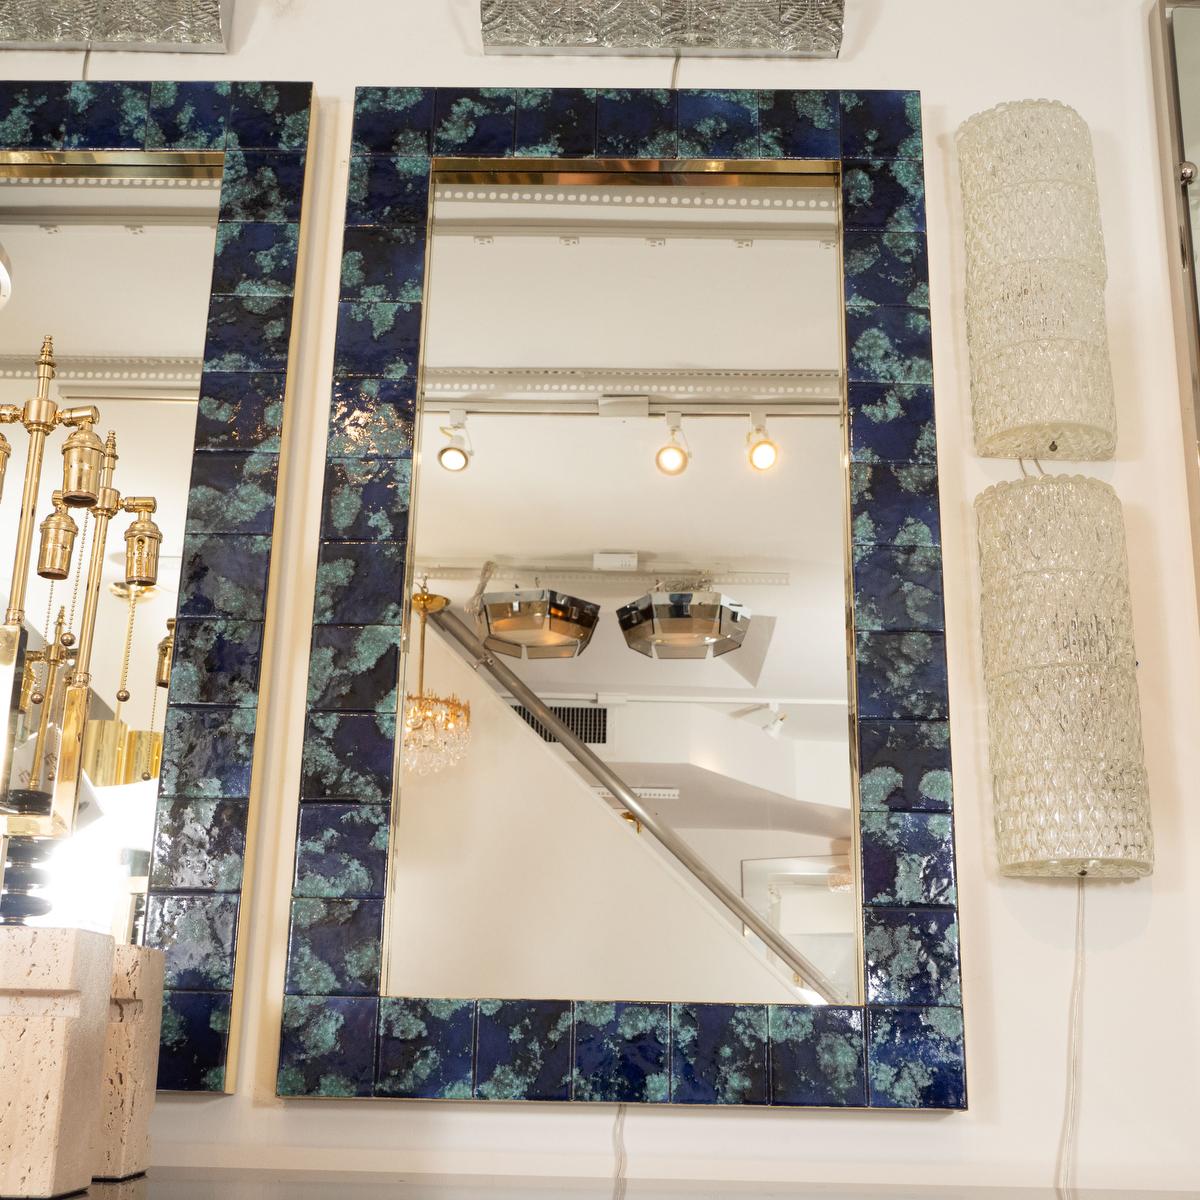 Brass framed mirror featuring mottled blue ceramic tile surround.